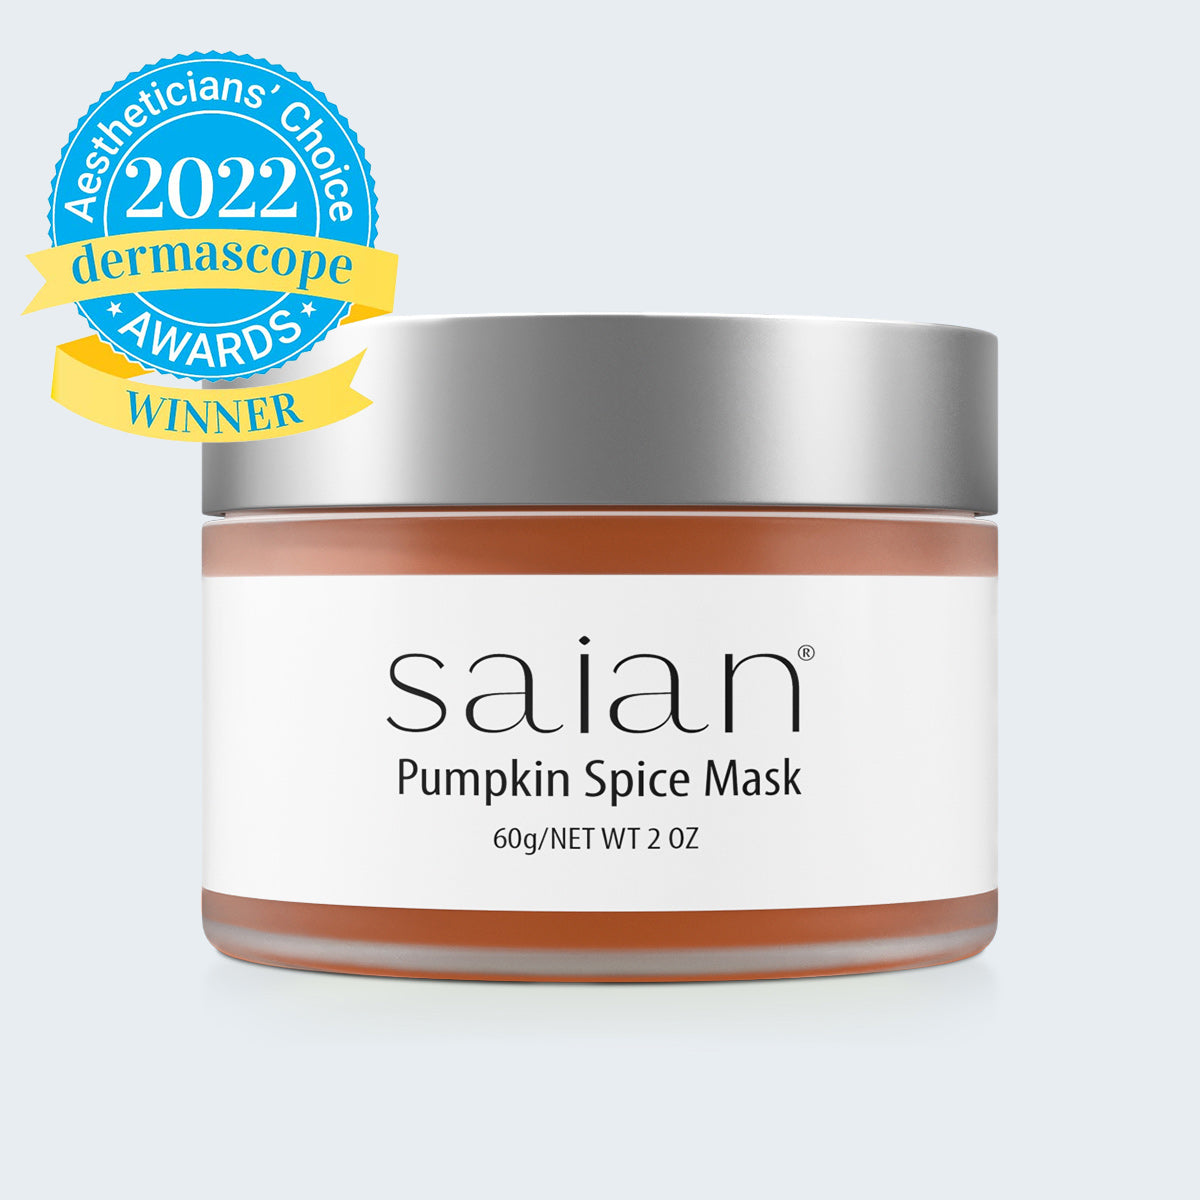 Saian Pumpkin Spice Mask 2 oz